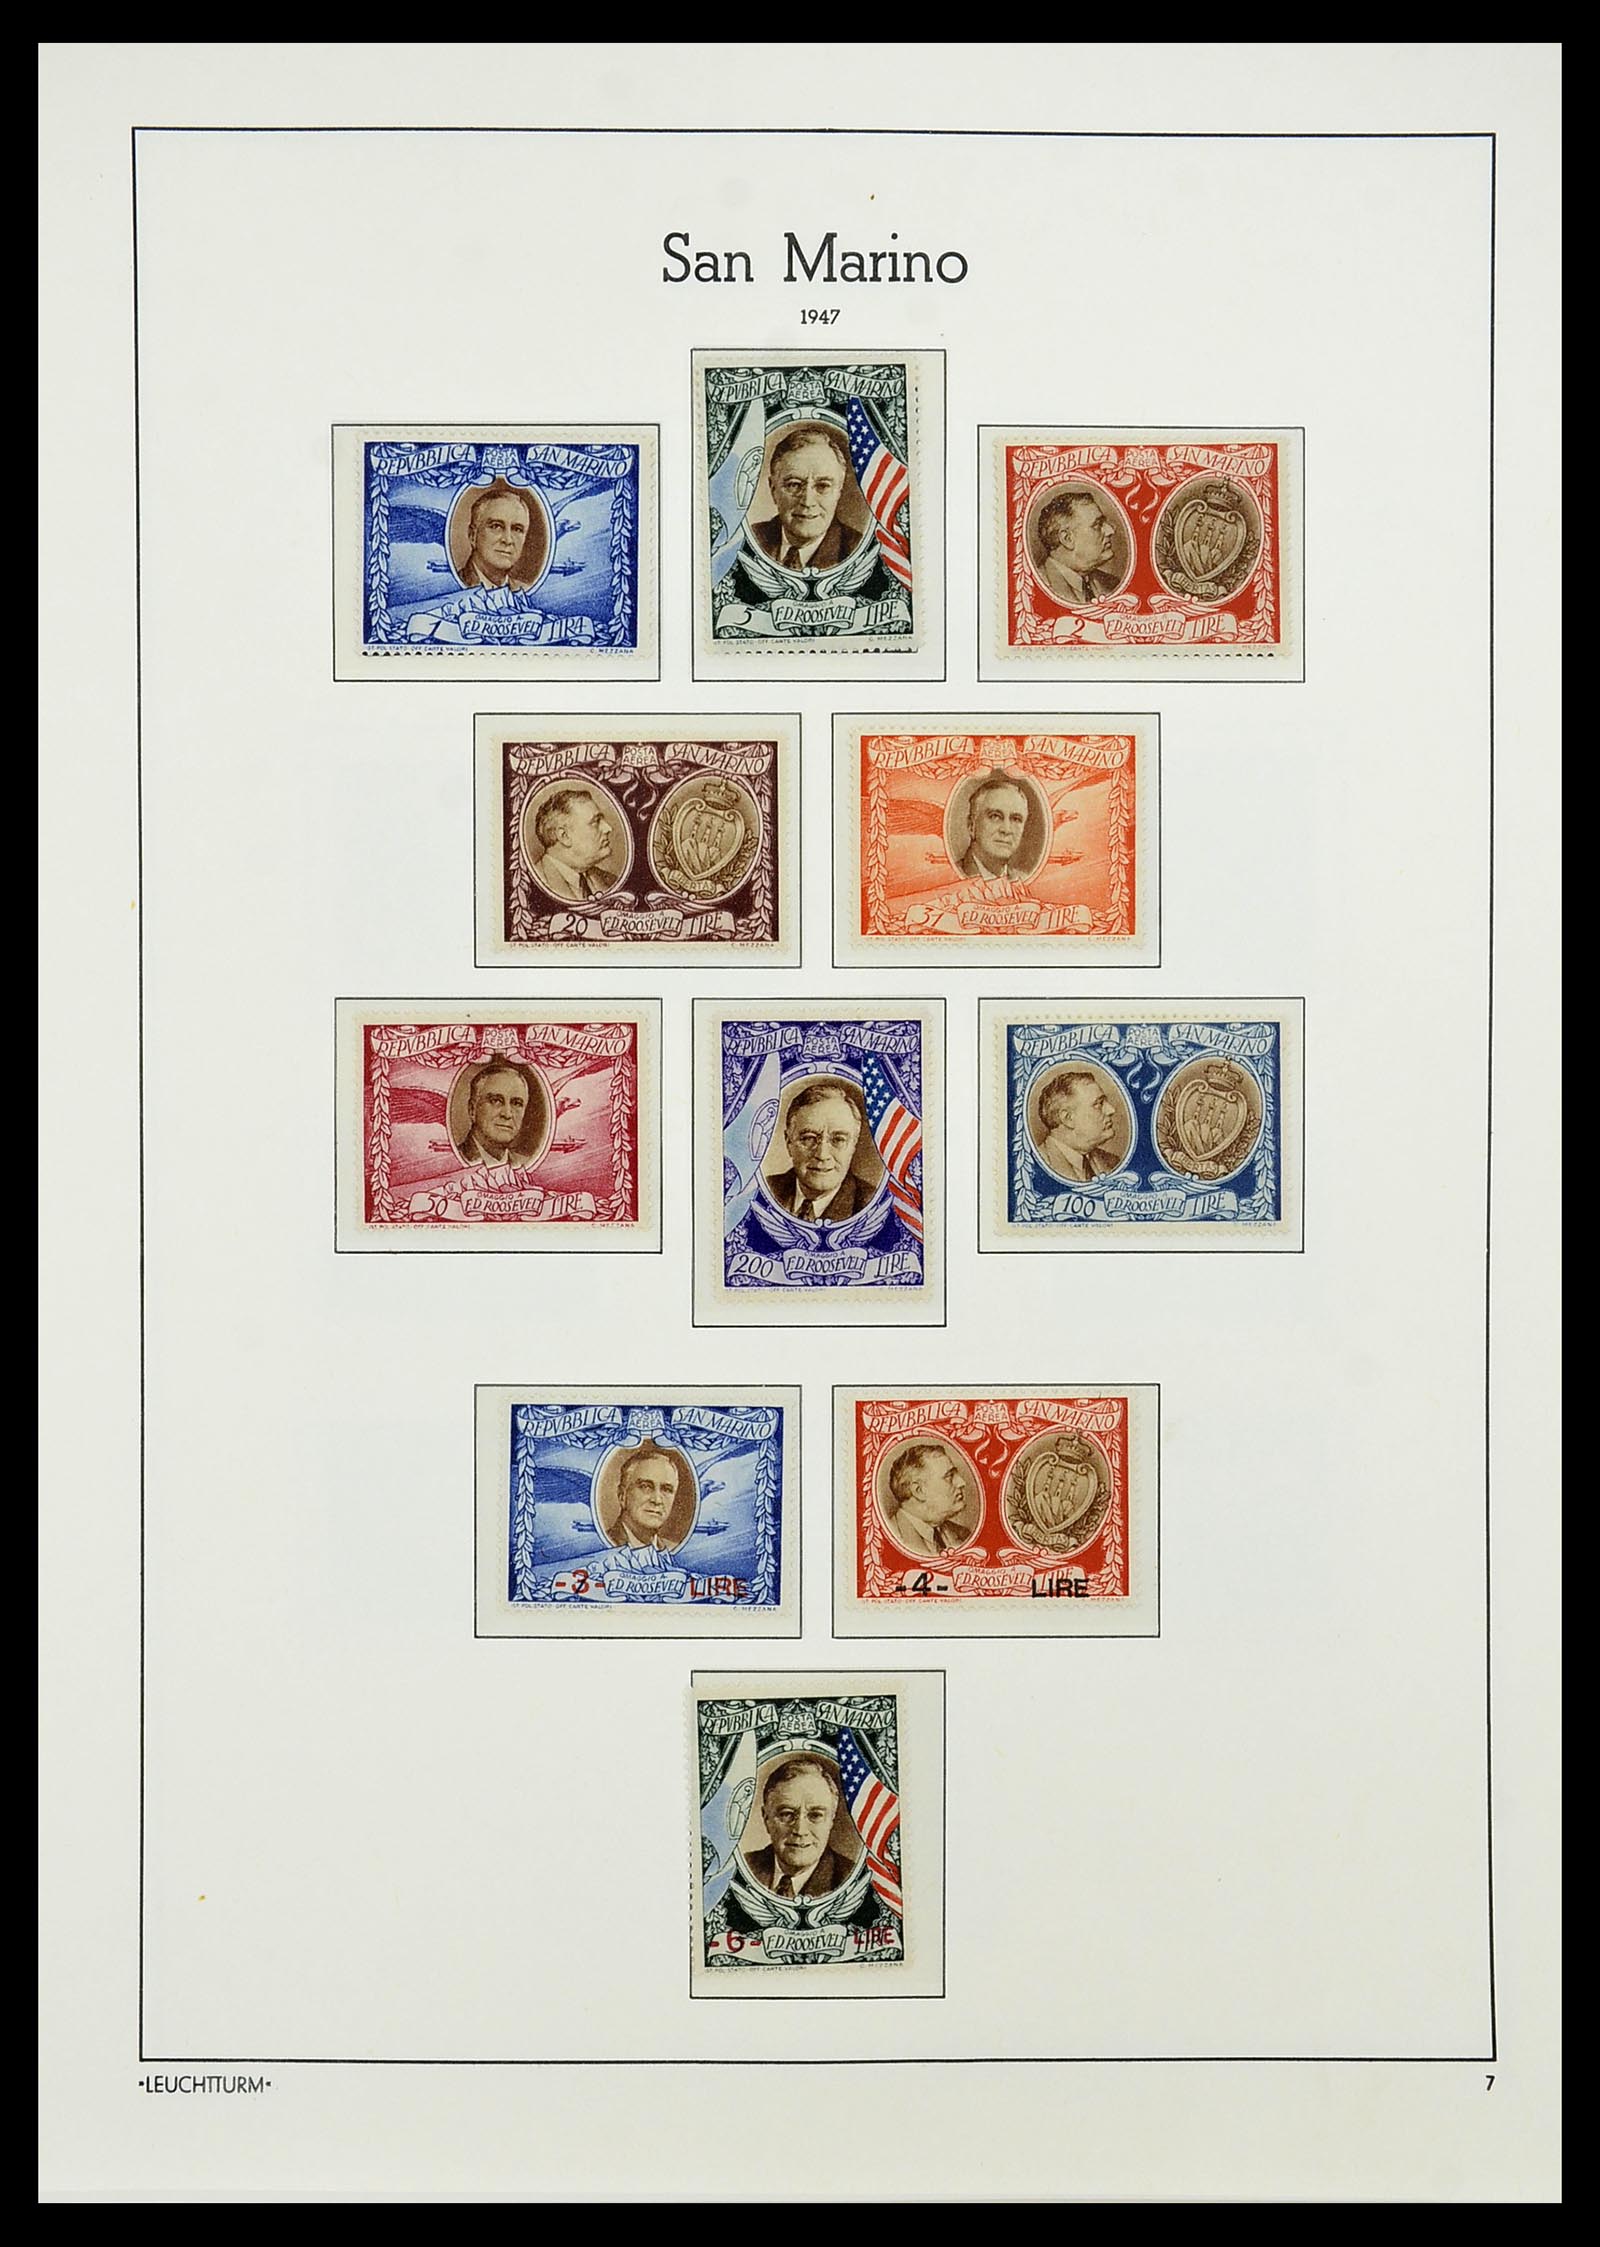 34243 041 - Stamp collection 34243 San Marino 1877-2008.